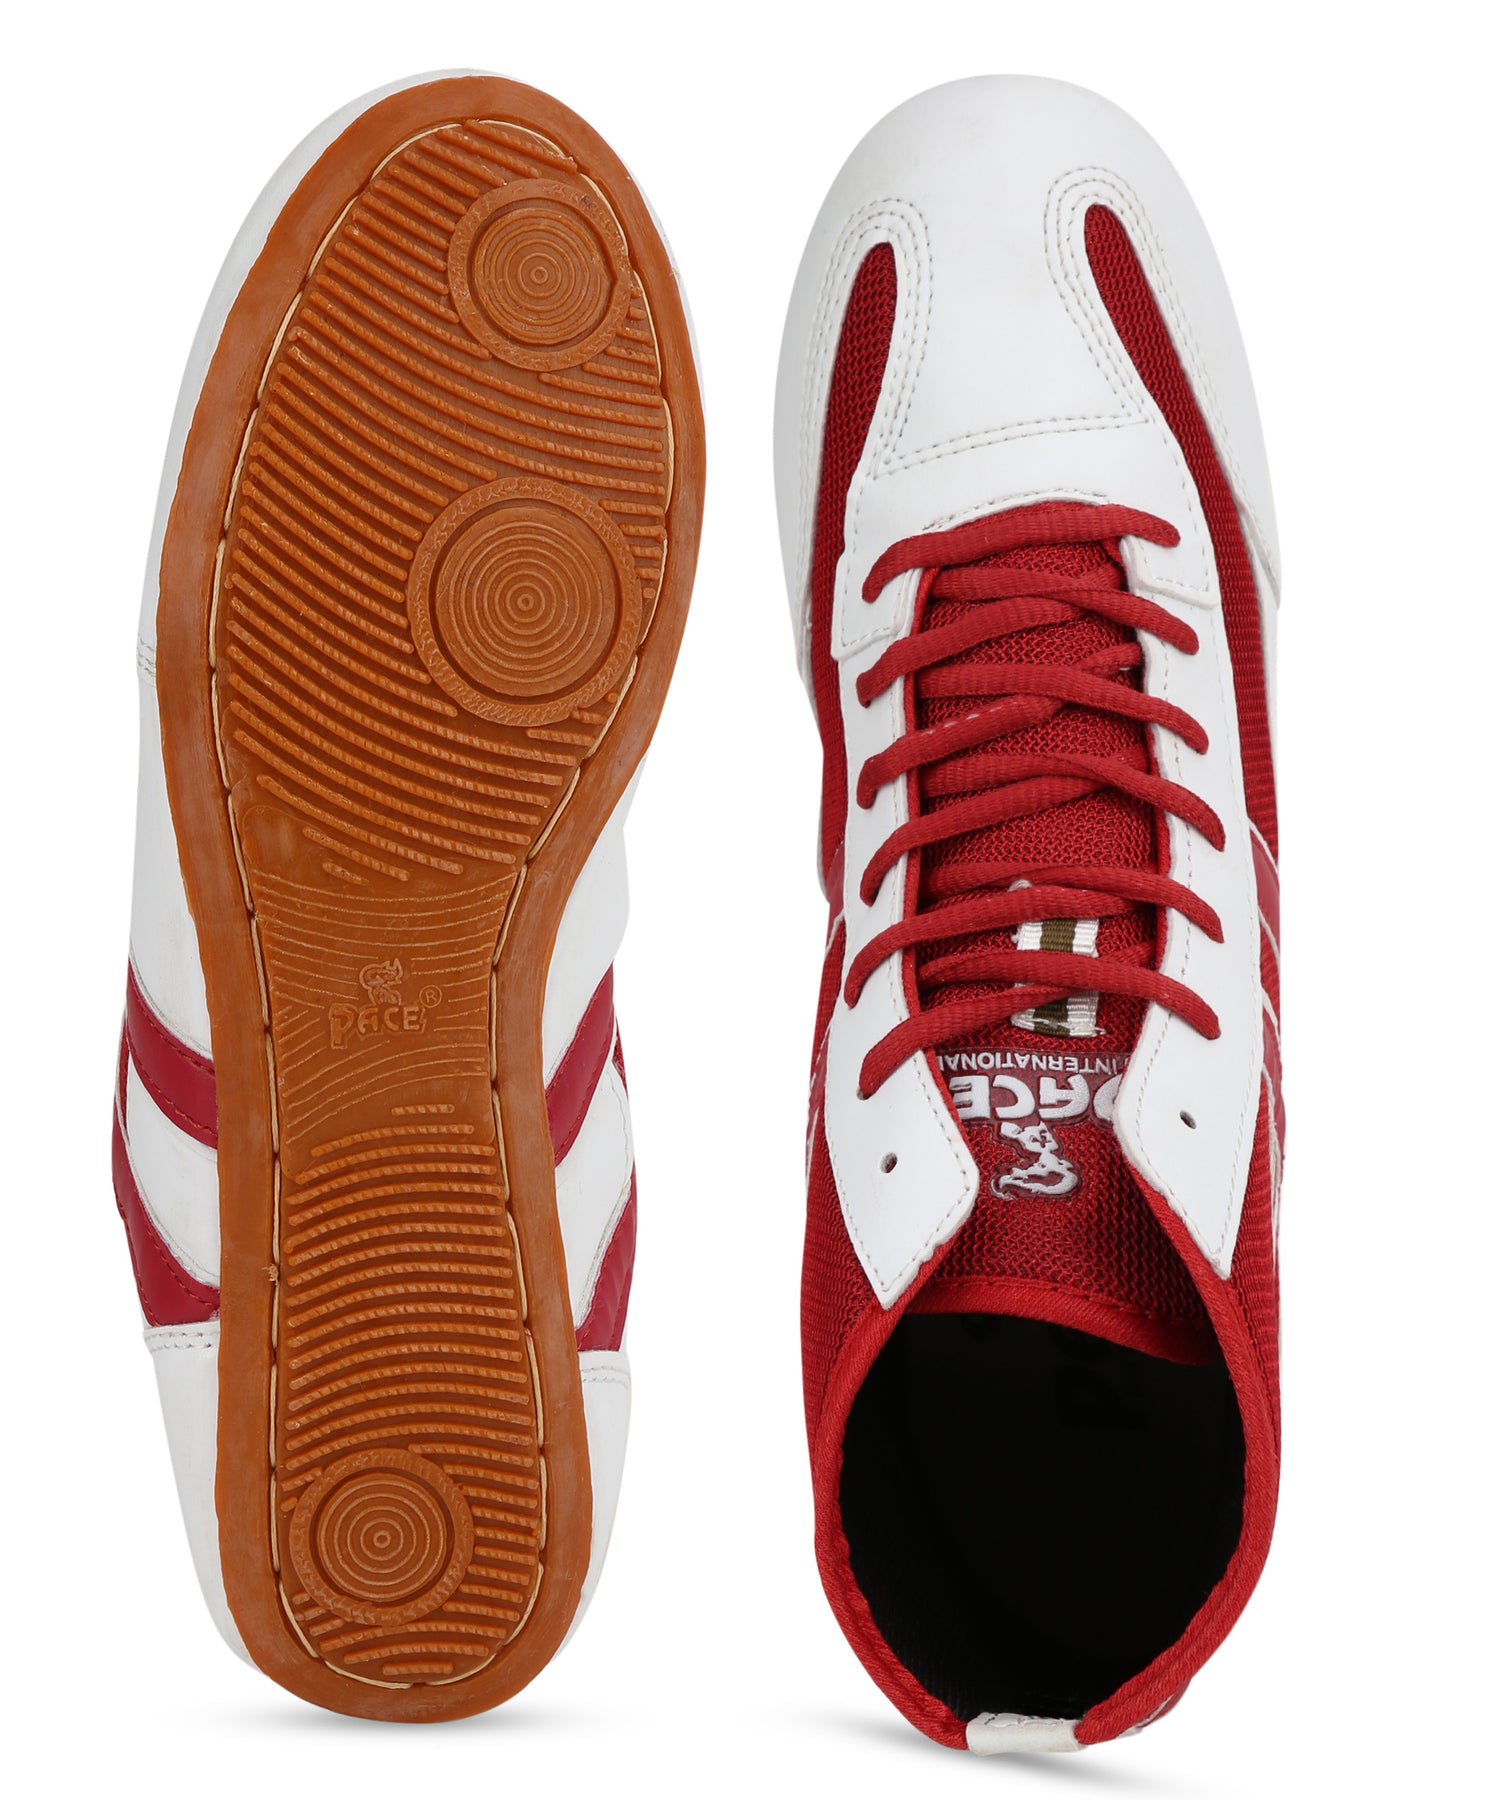 Red And White Men Sega Kabaddi Shoes at Rs 445/pair in Meerut